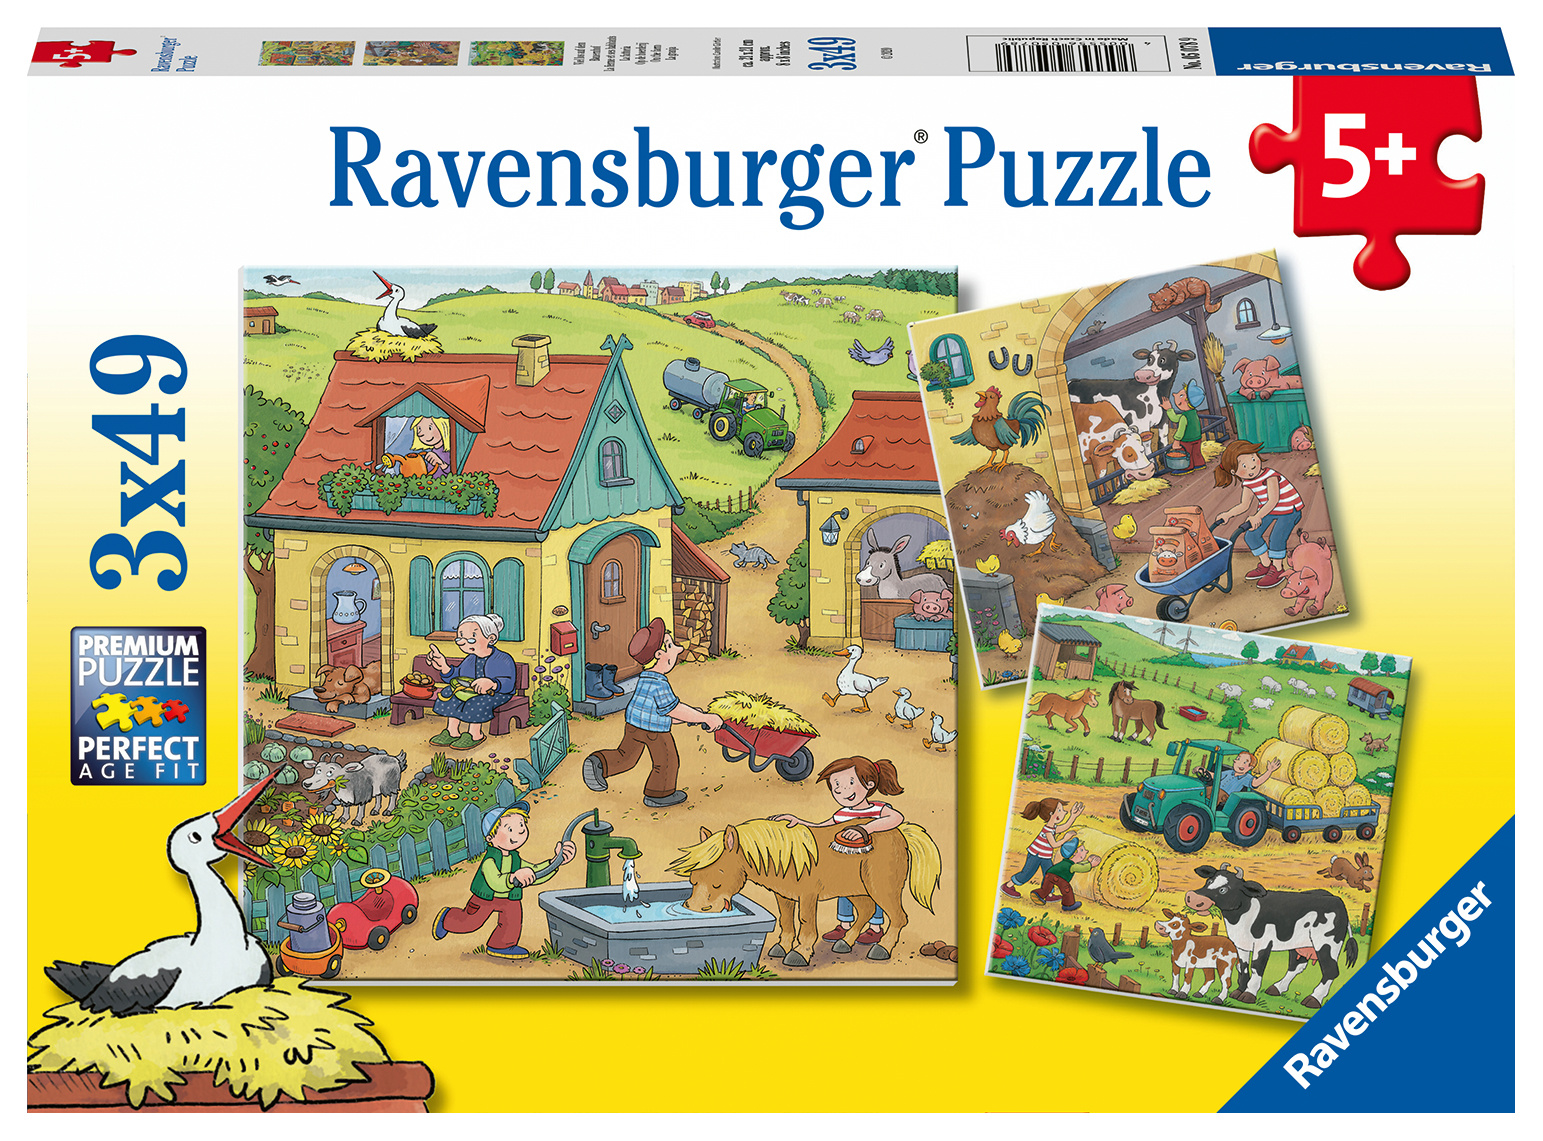 Ravensburger kinderpuzzels voordelig kopen? Brede keuze! - Puzzels123